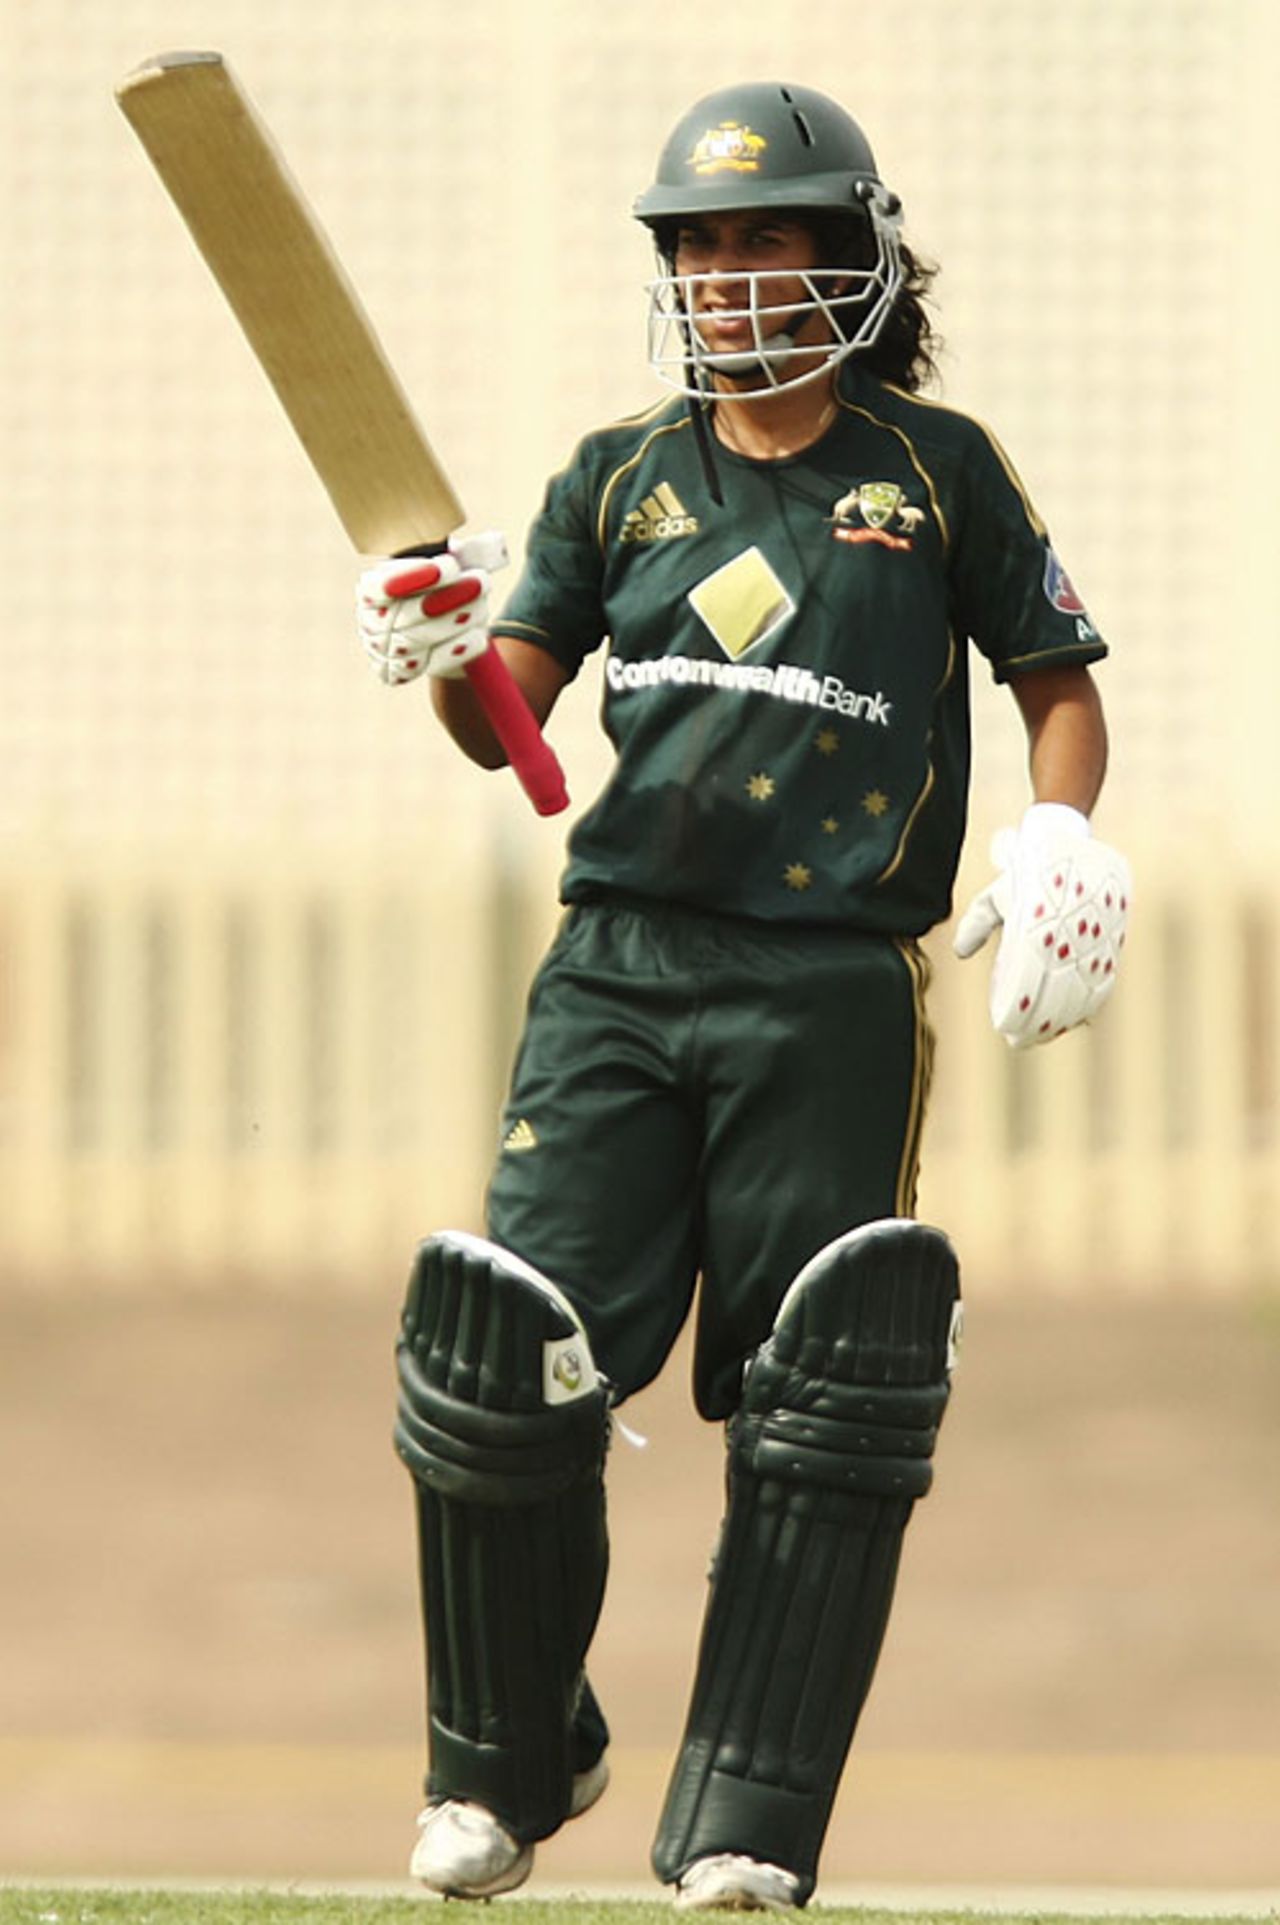 Lisa Sthalekar scored an unbeaten 73 off 69 balls, Australia v India, 1st Women's ODI, Sydney, 31 October, 2008